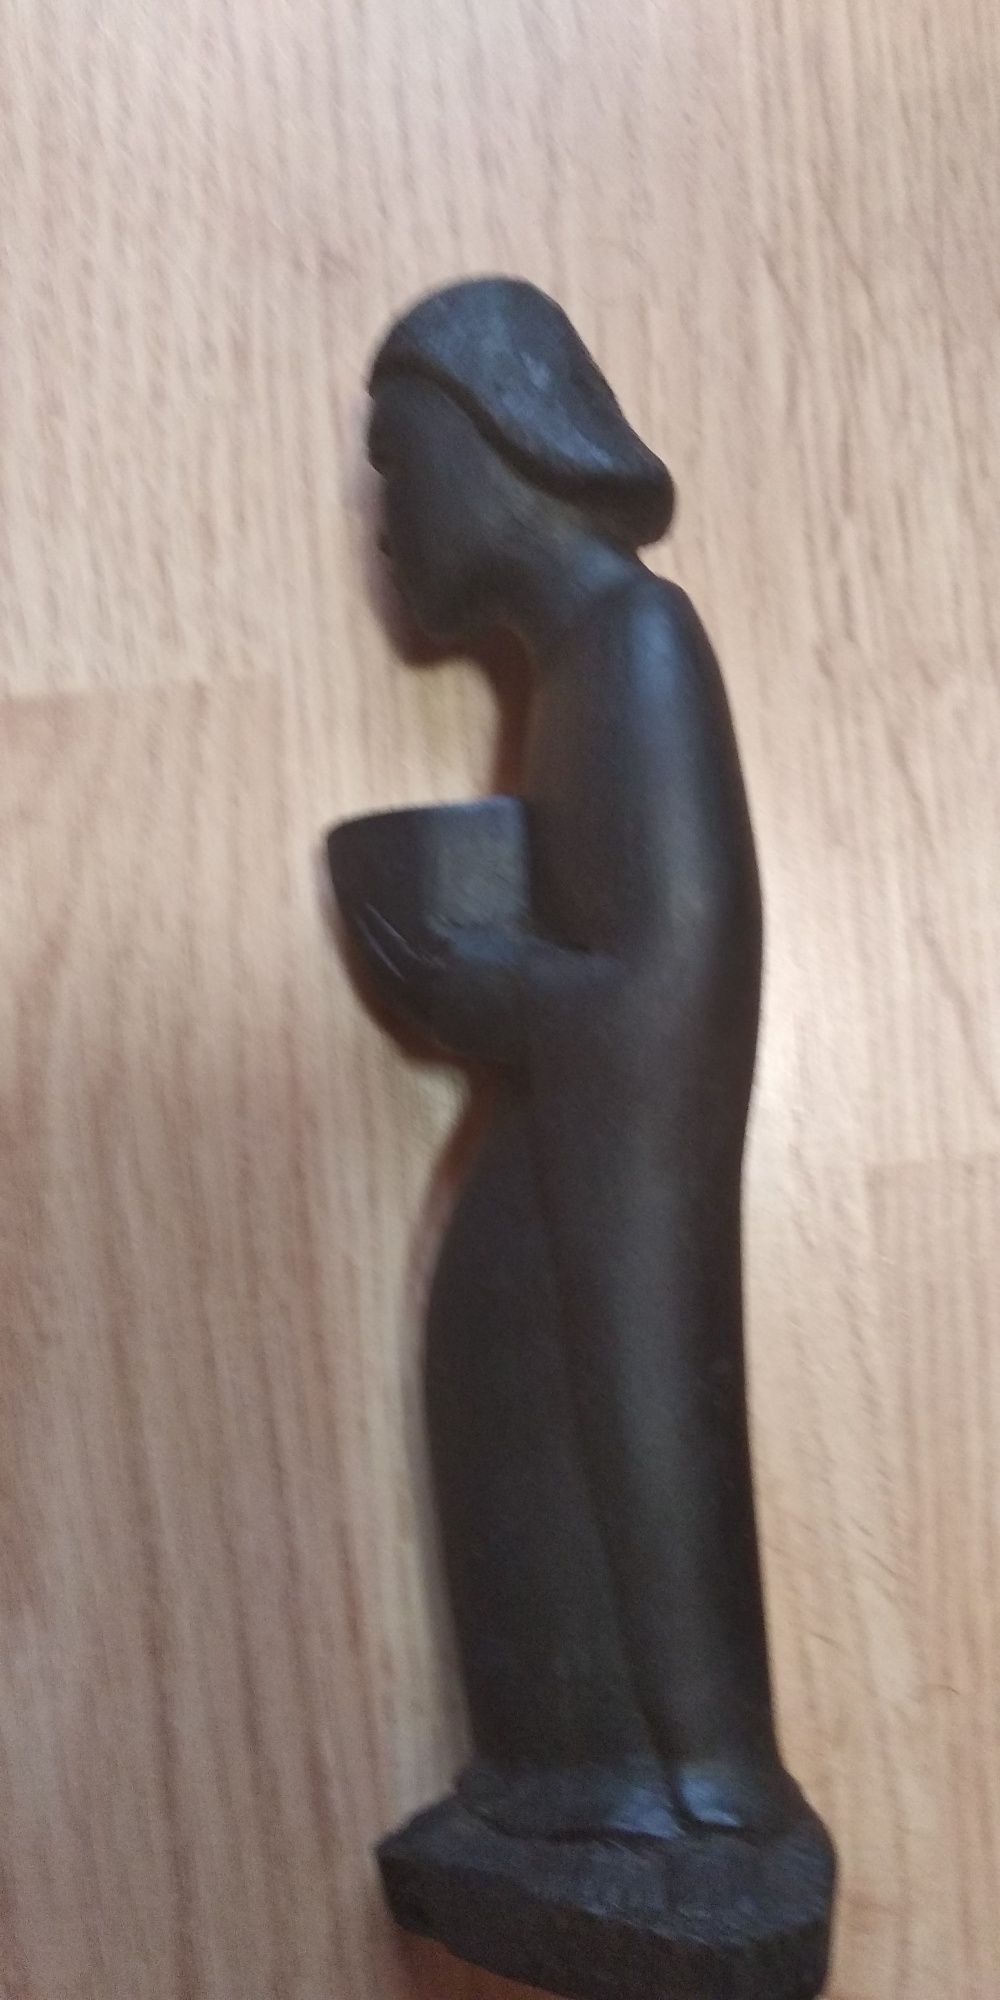 Statueta africana din abanos